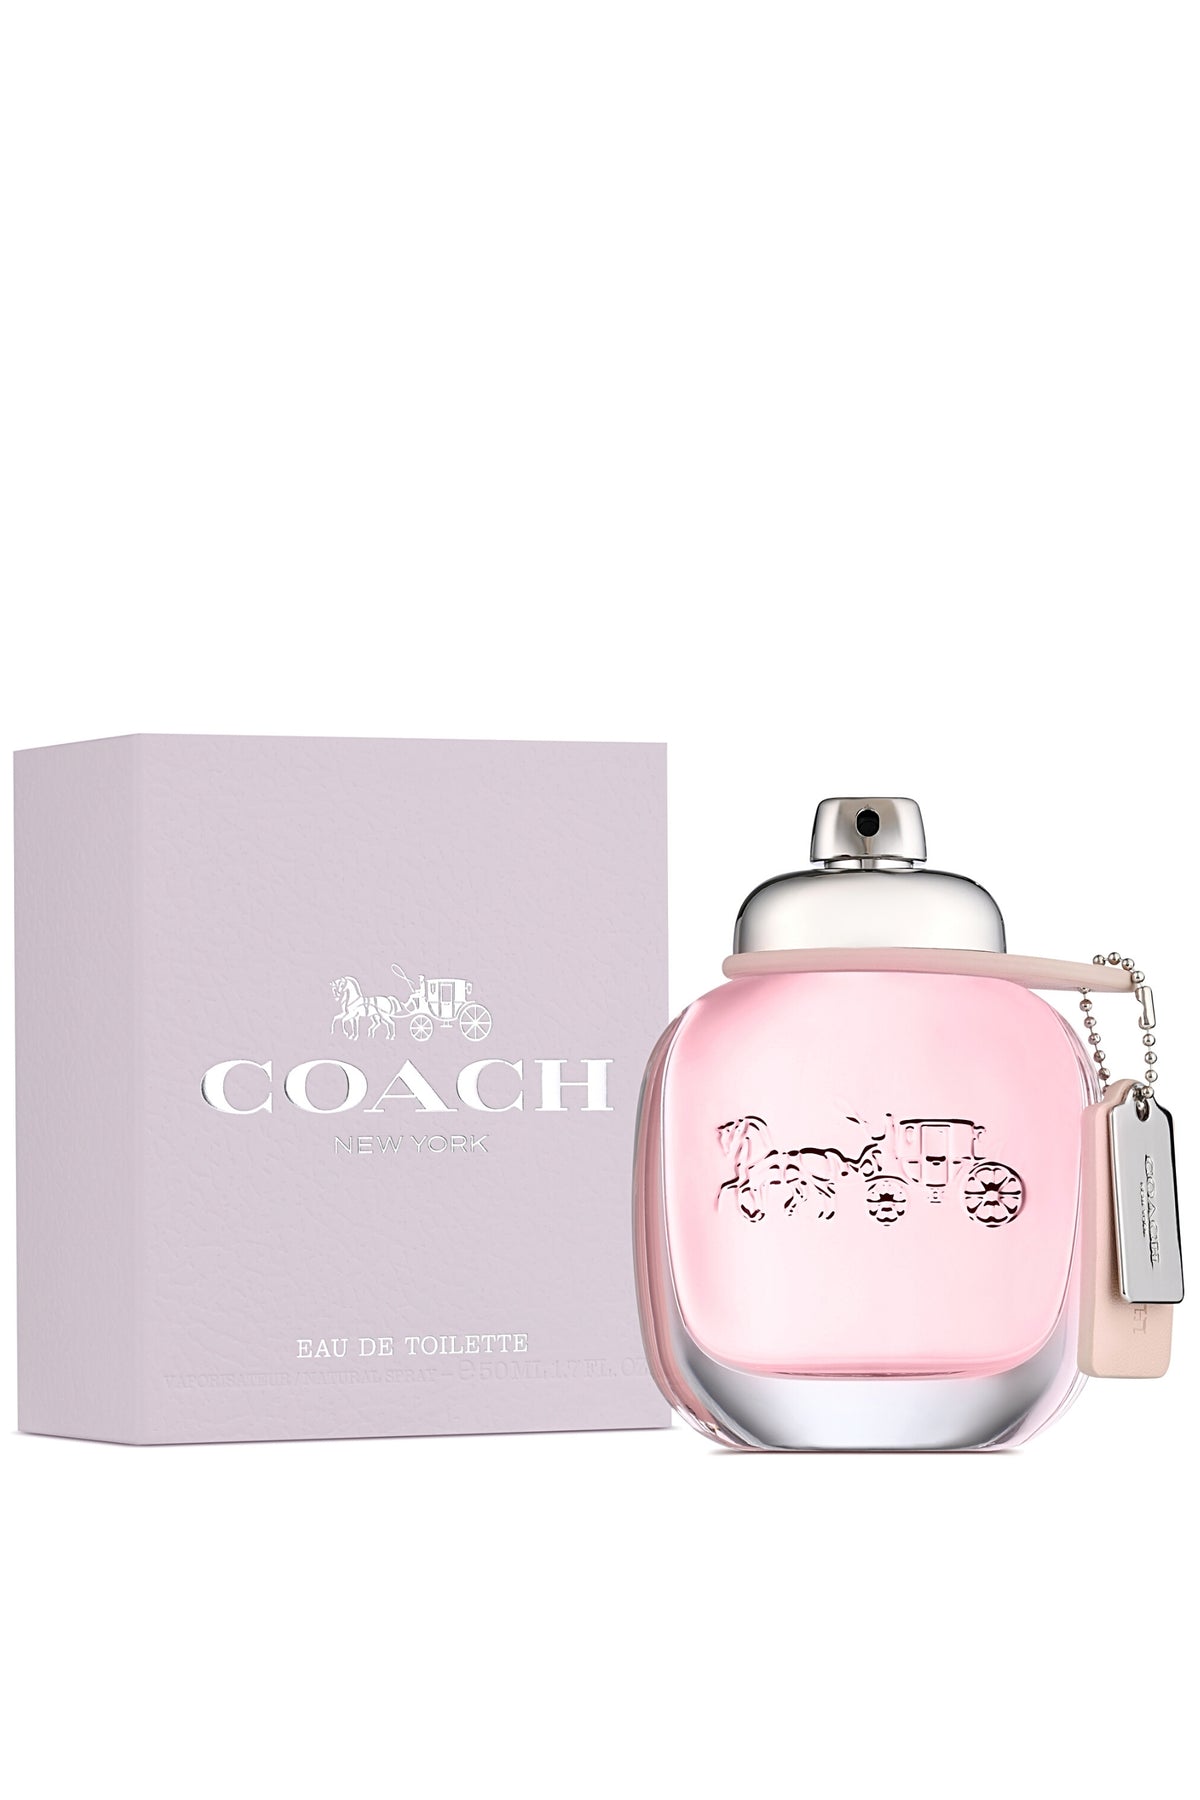 Coach | Coach New York Perfume | REBL